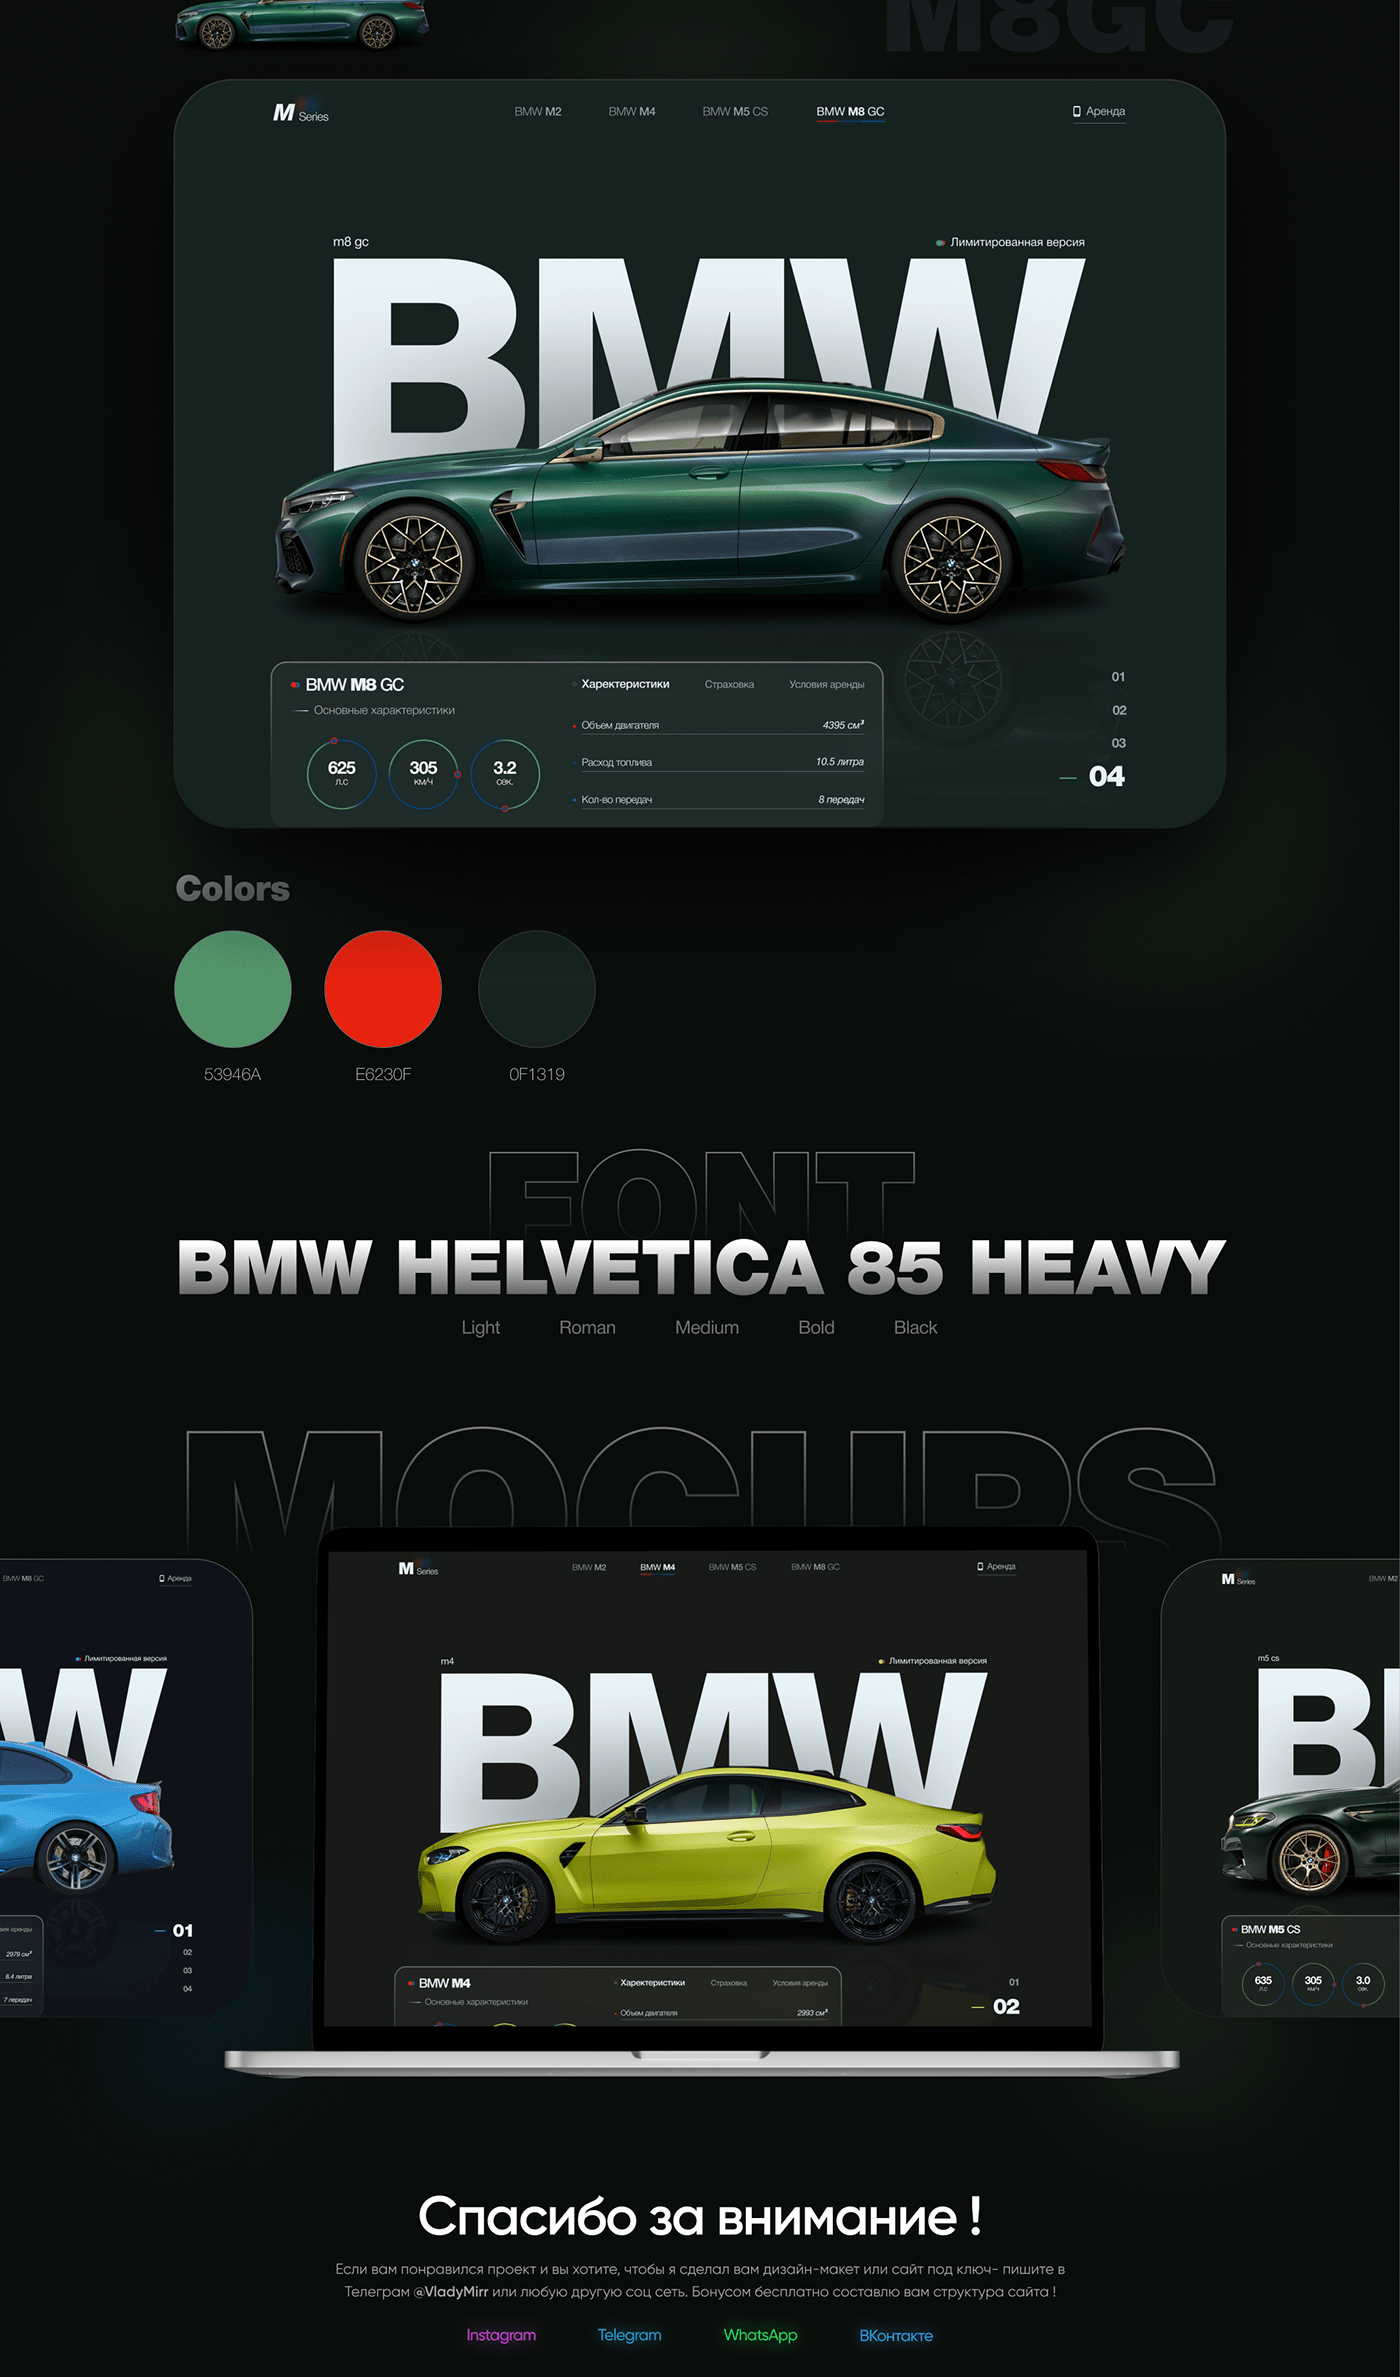 BMW Car rental CAR SERVICE Cars Figma Porsche UI user interface ux